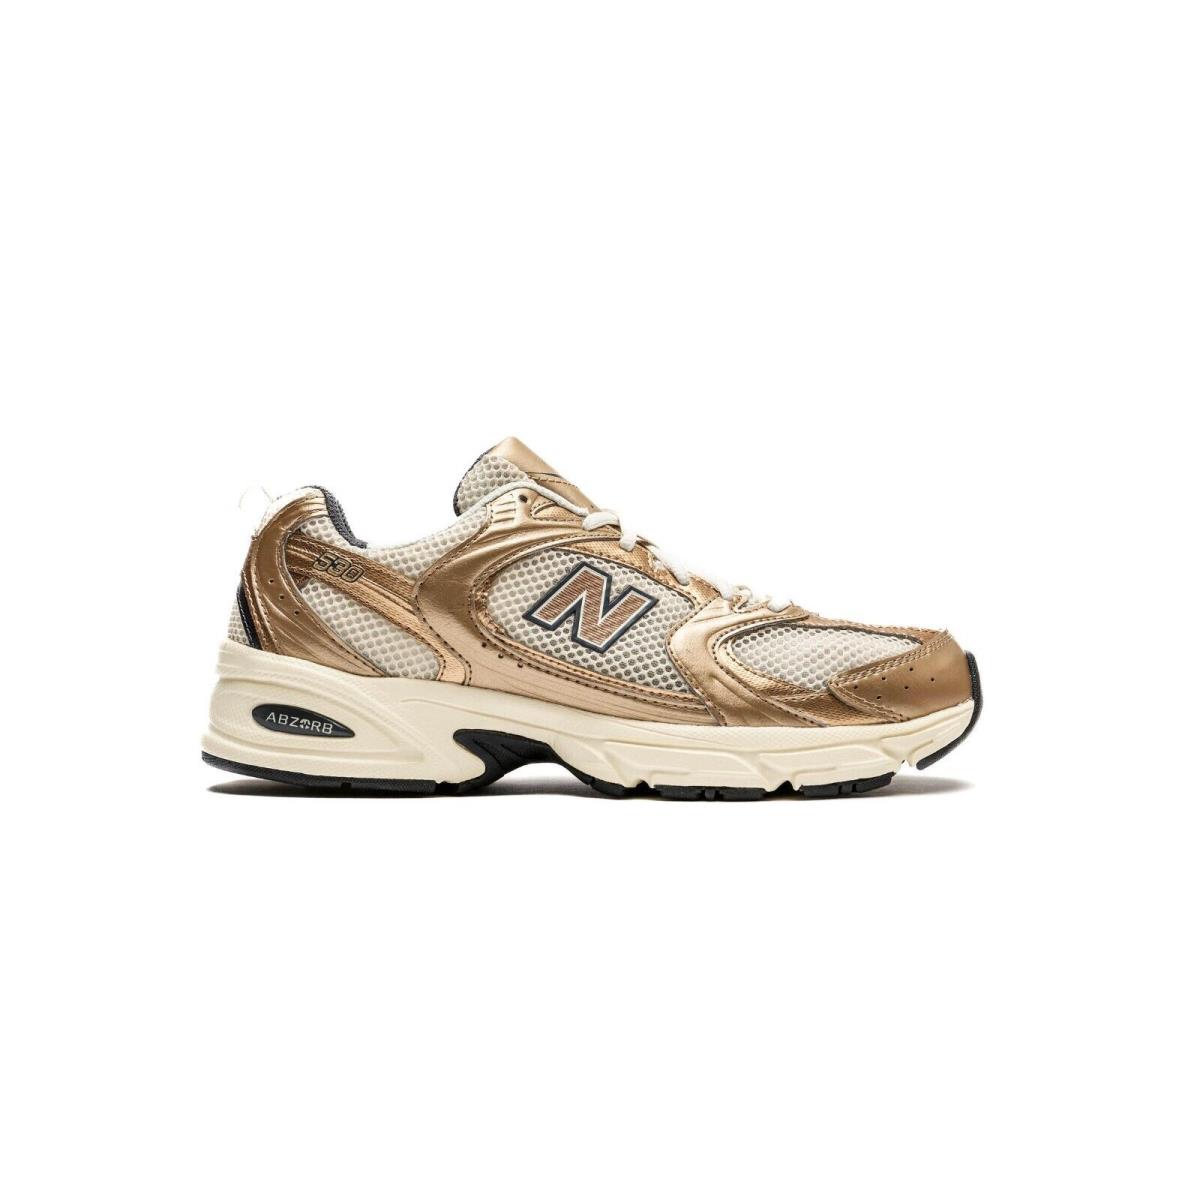 New Balance 530 Turtledove Gold Metallic MR530LA Running Shoes Casual Sneakers